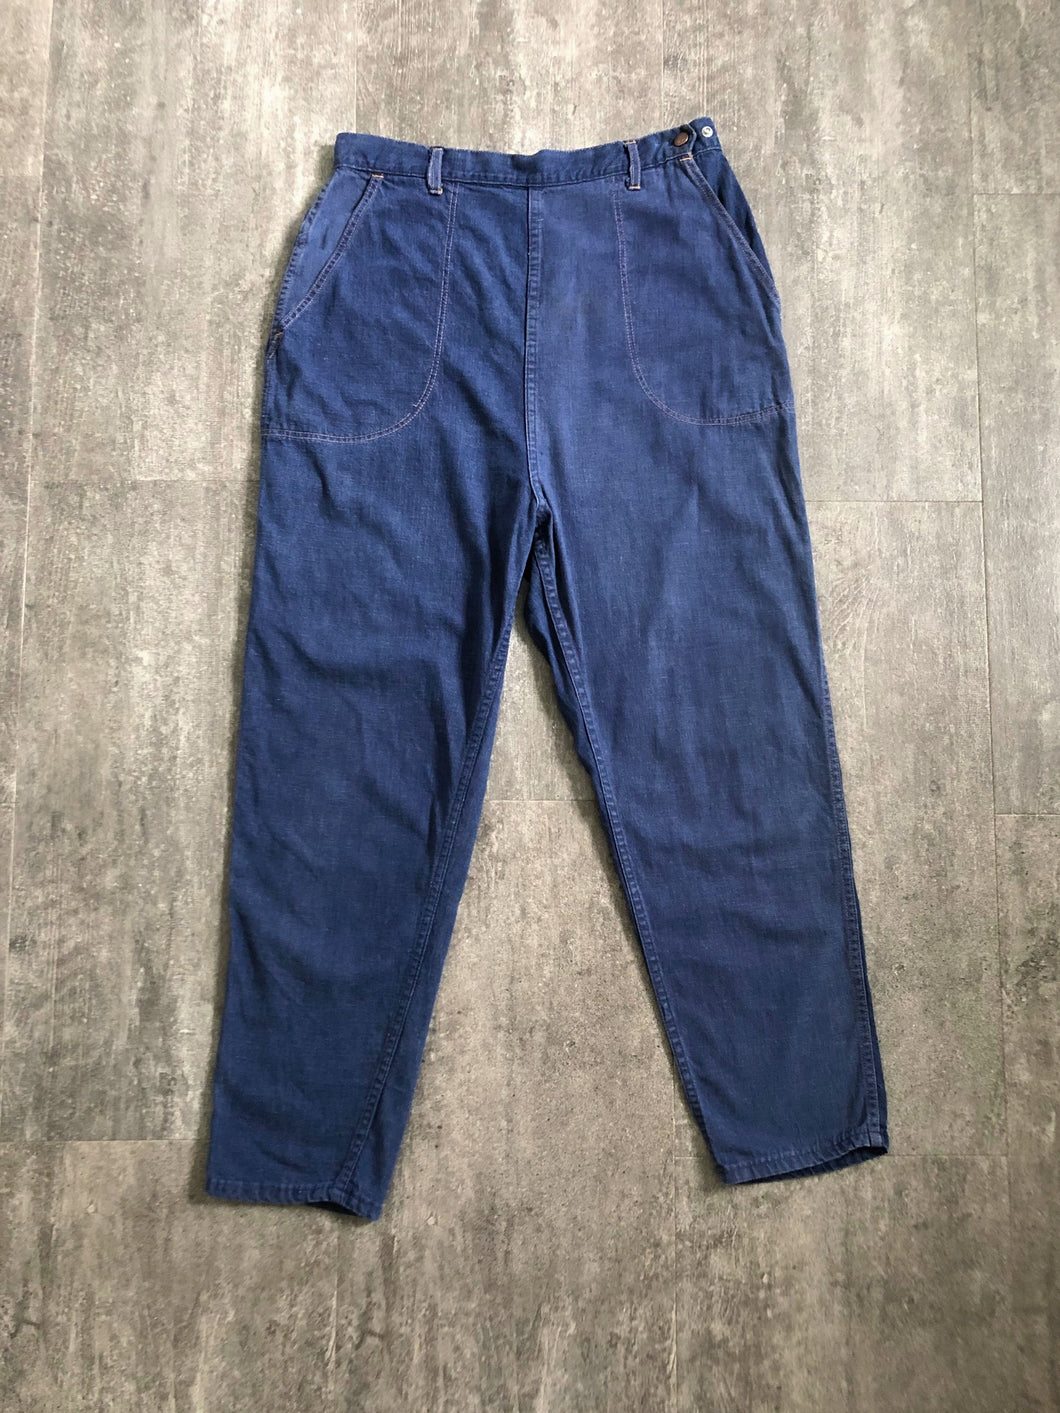 1950s denim . vintage 50s side zips . 30-31 waist